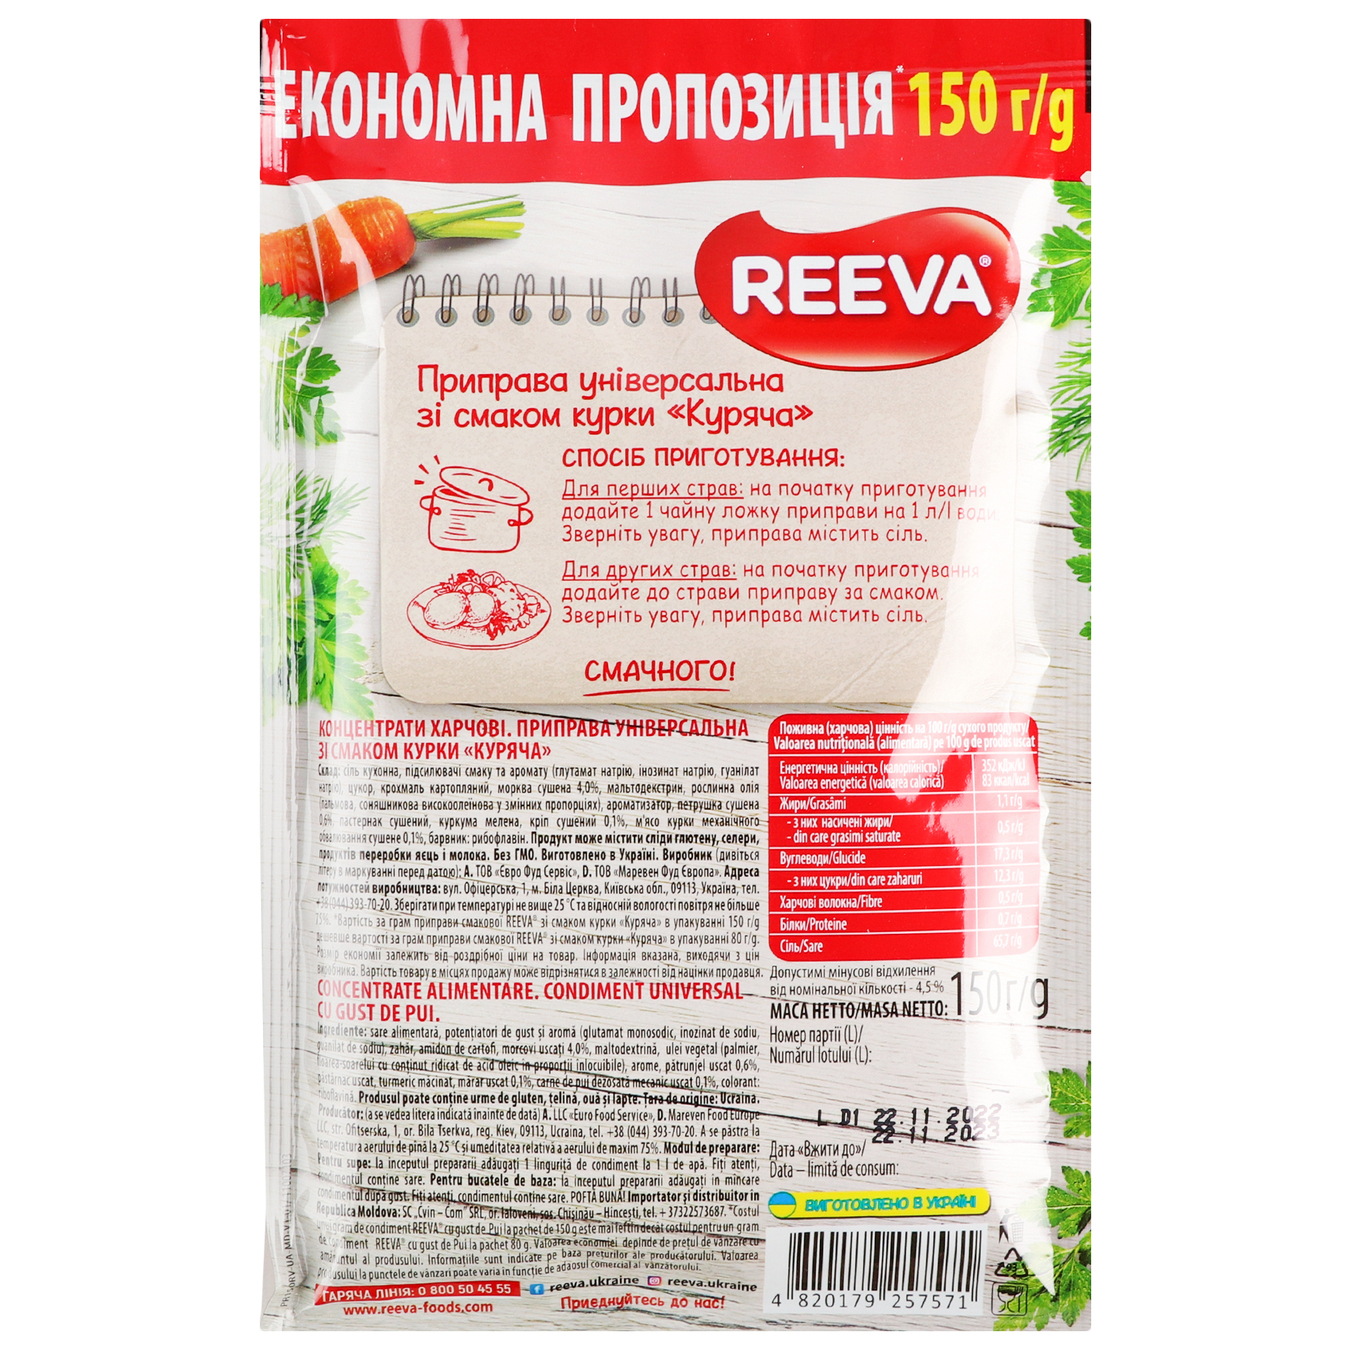 Reeva universal seasoning with chicken flavor 150g 3